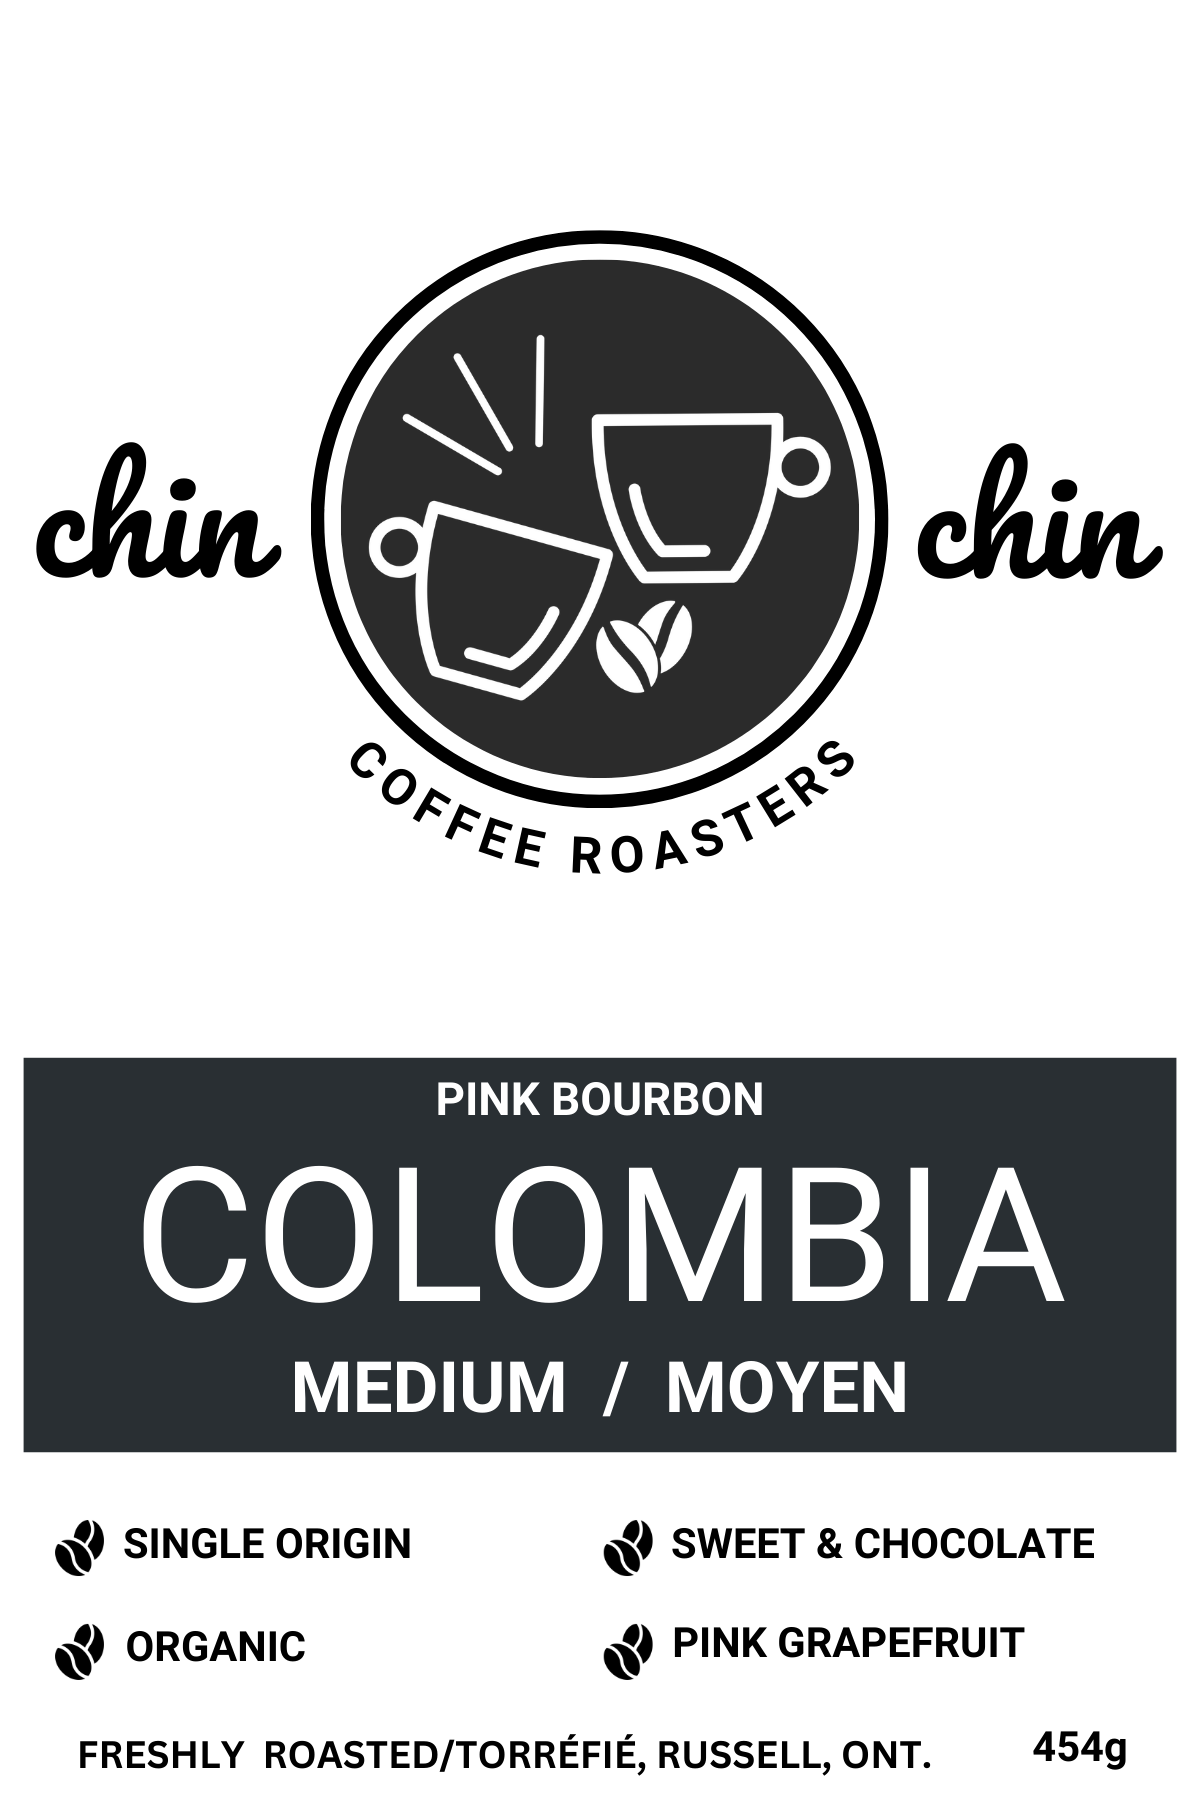 COLOMBIA PINK BURBON MEDIUM ROAST-Chin Chin Coffee Roasters